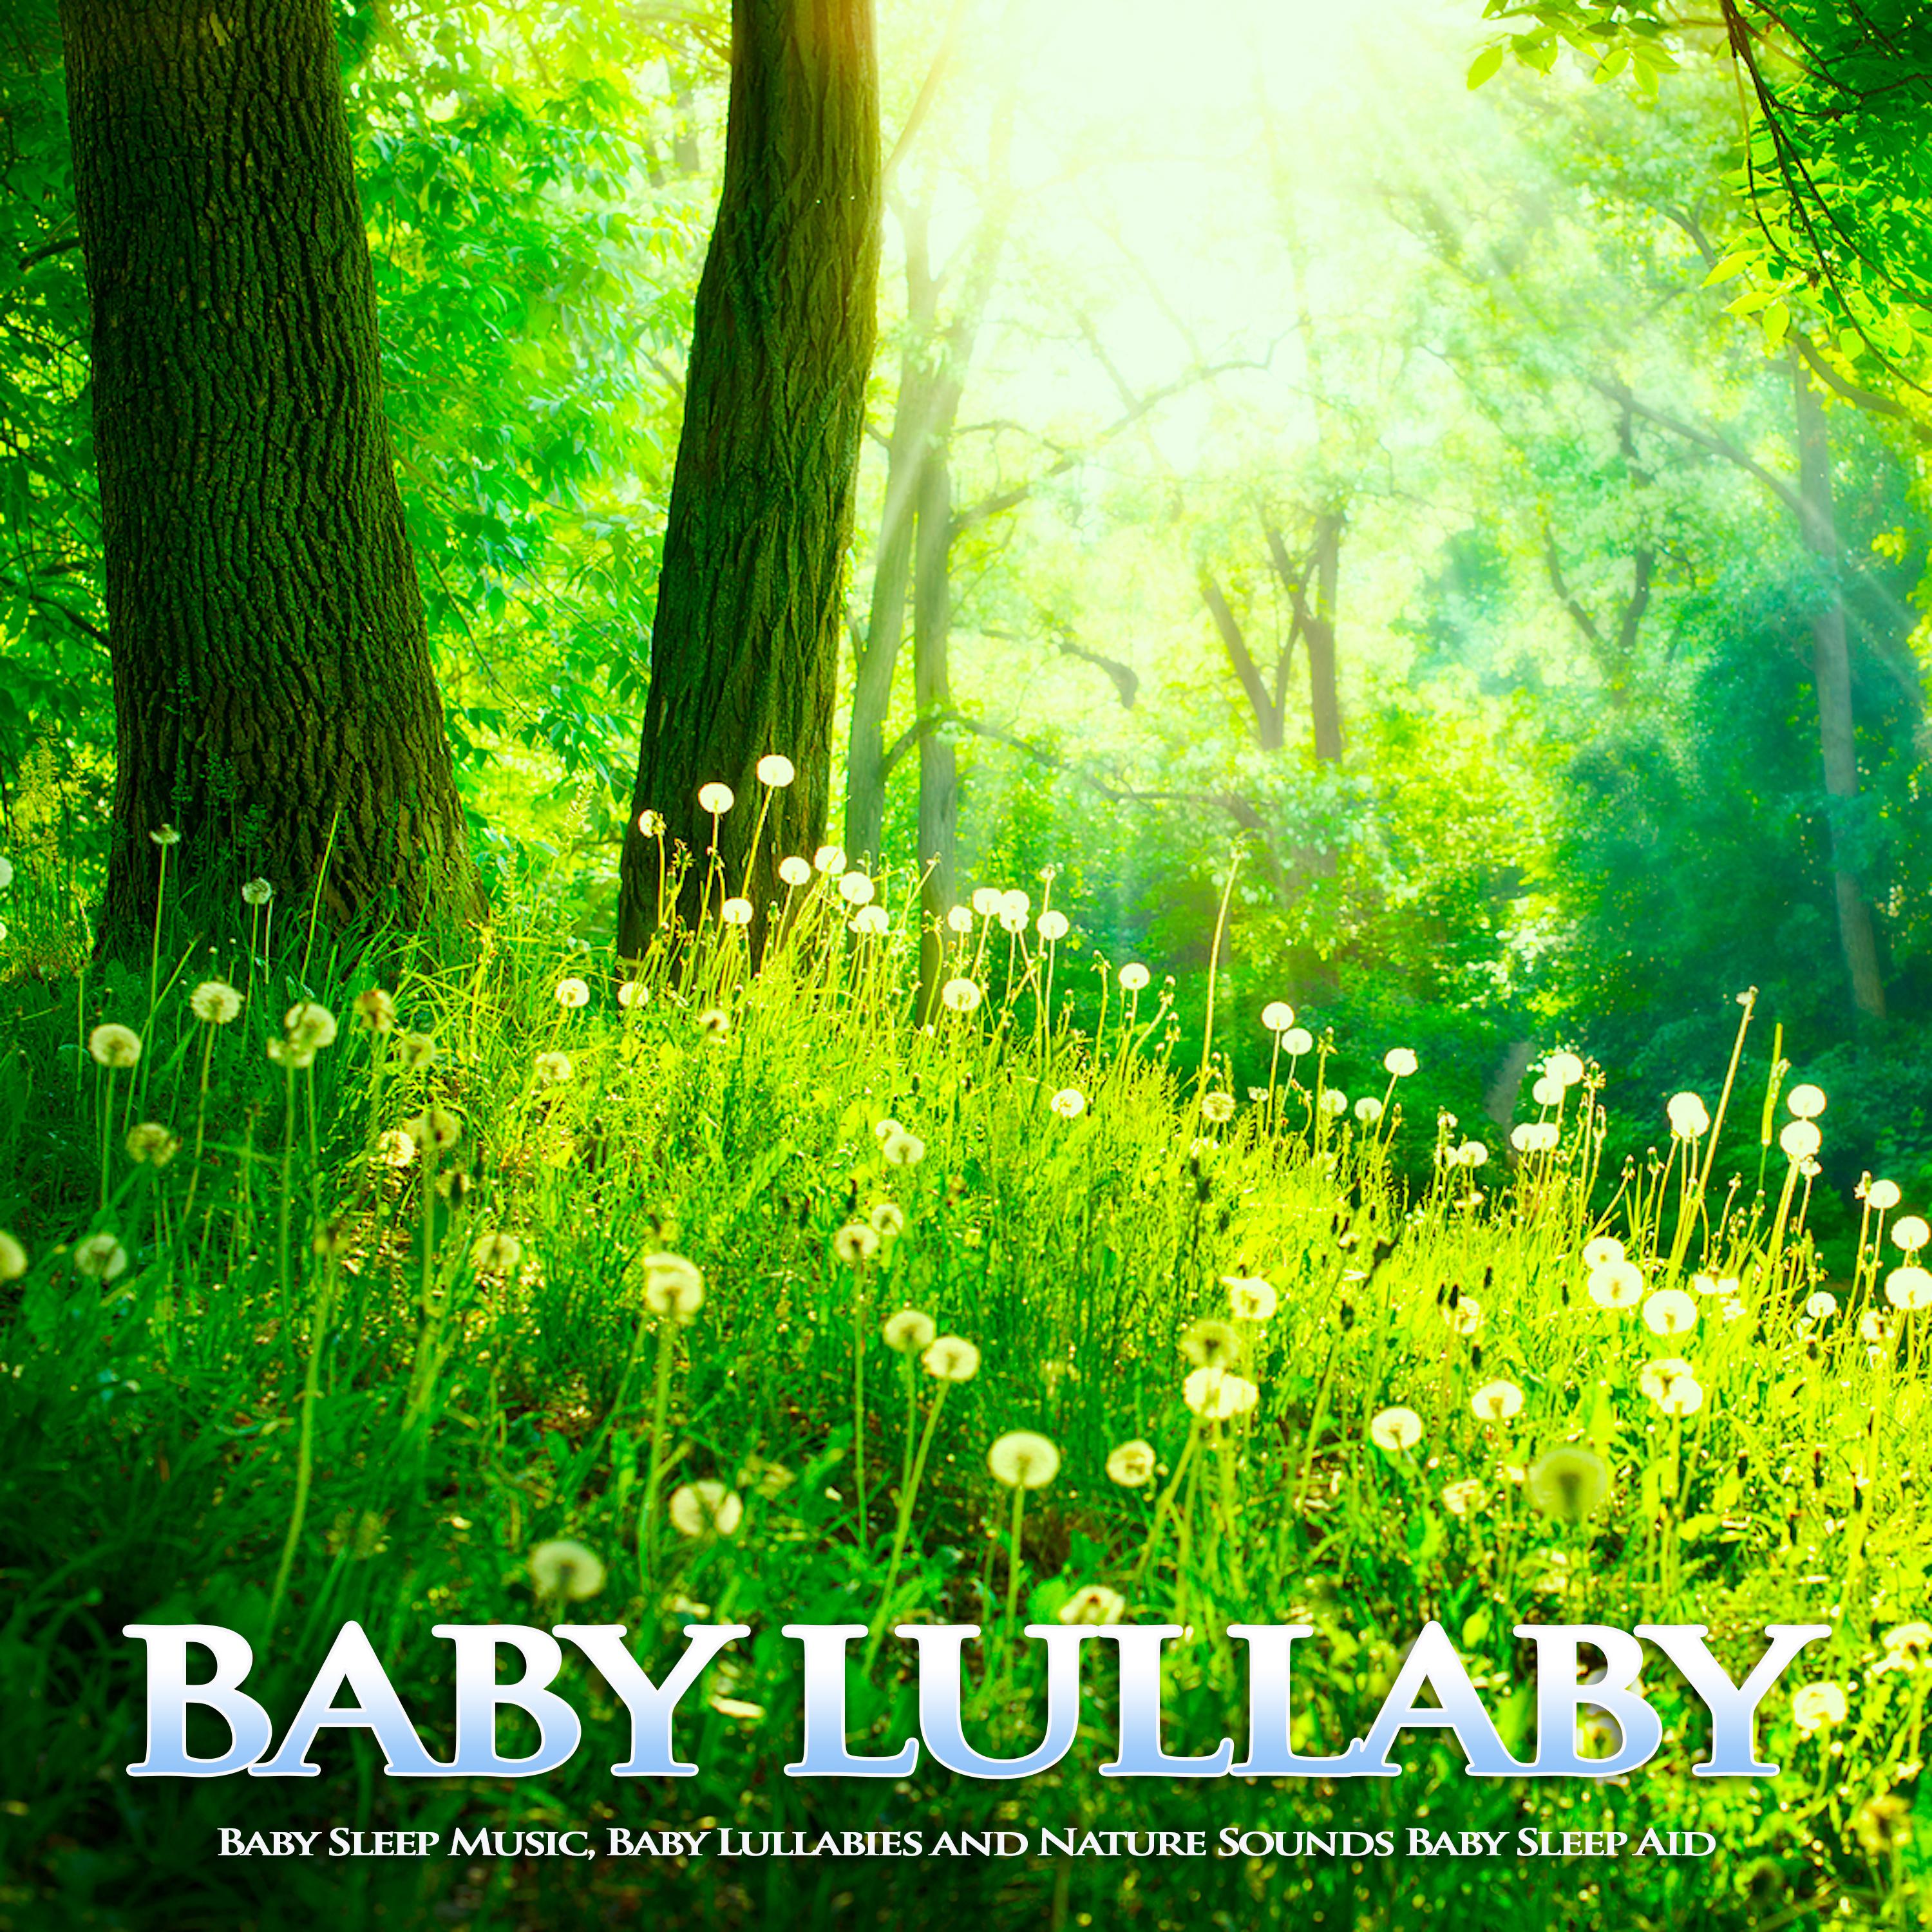 Baby Lullaby: Baby Sleep Music, Baby Lullabies and Nature Sounds Baby Sleep Aid